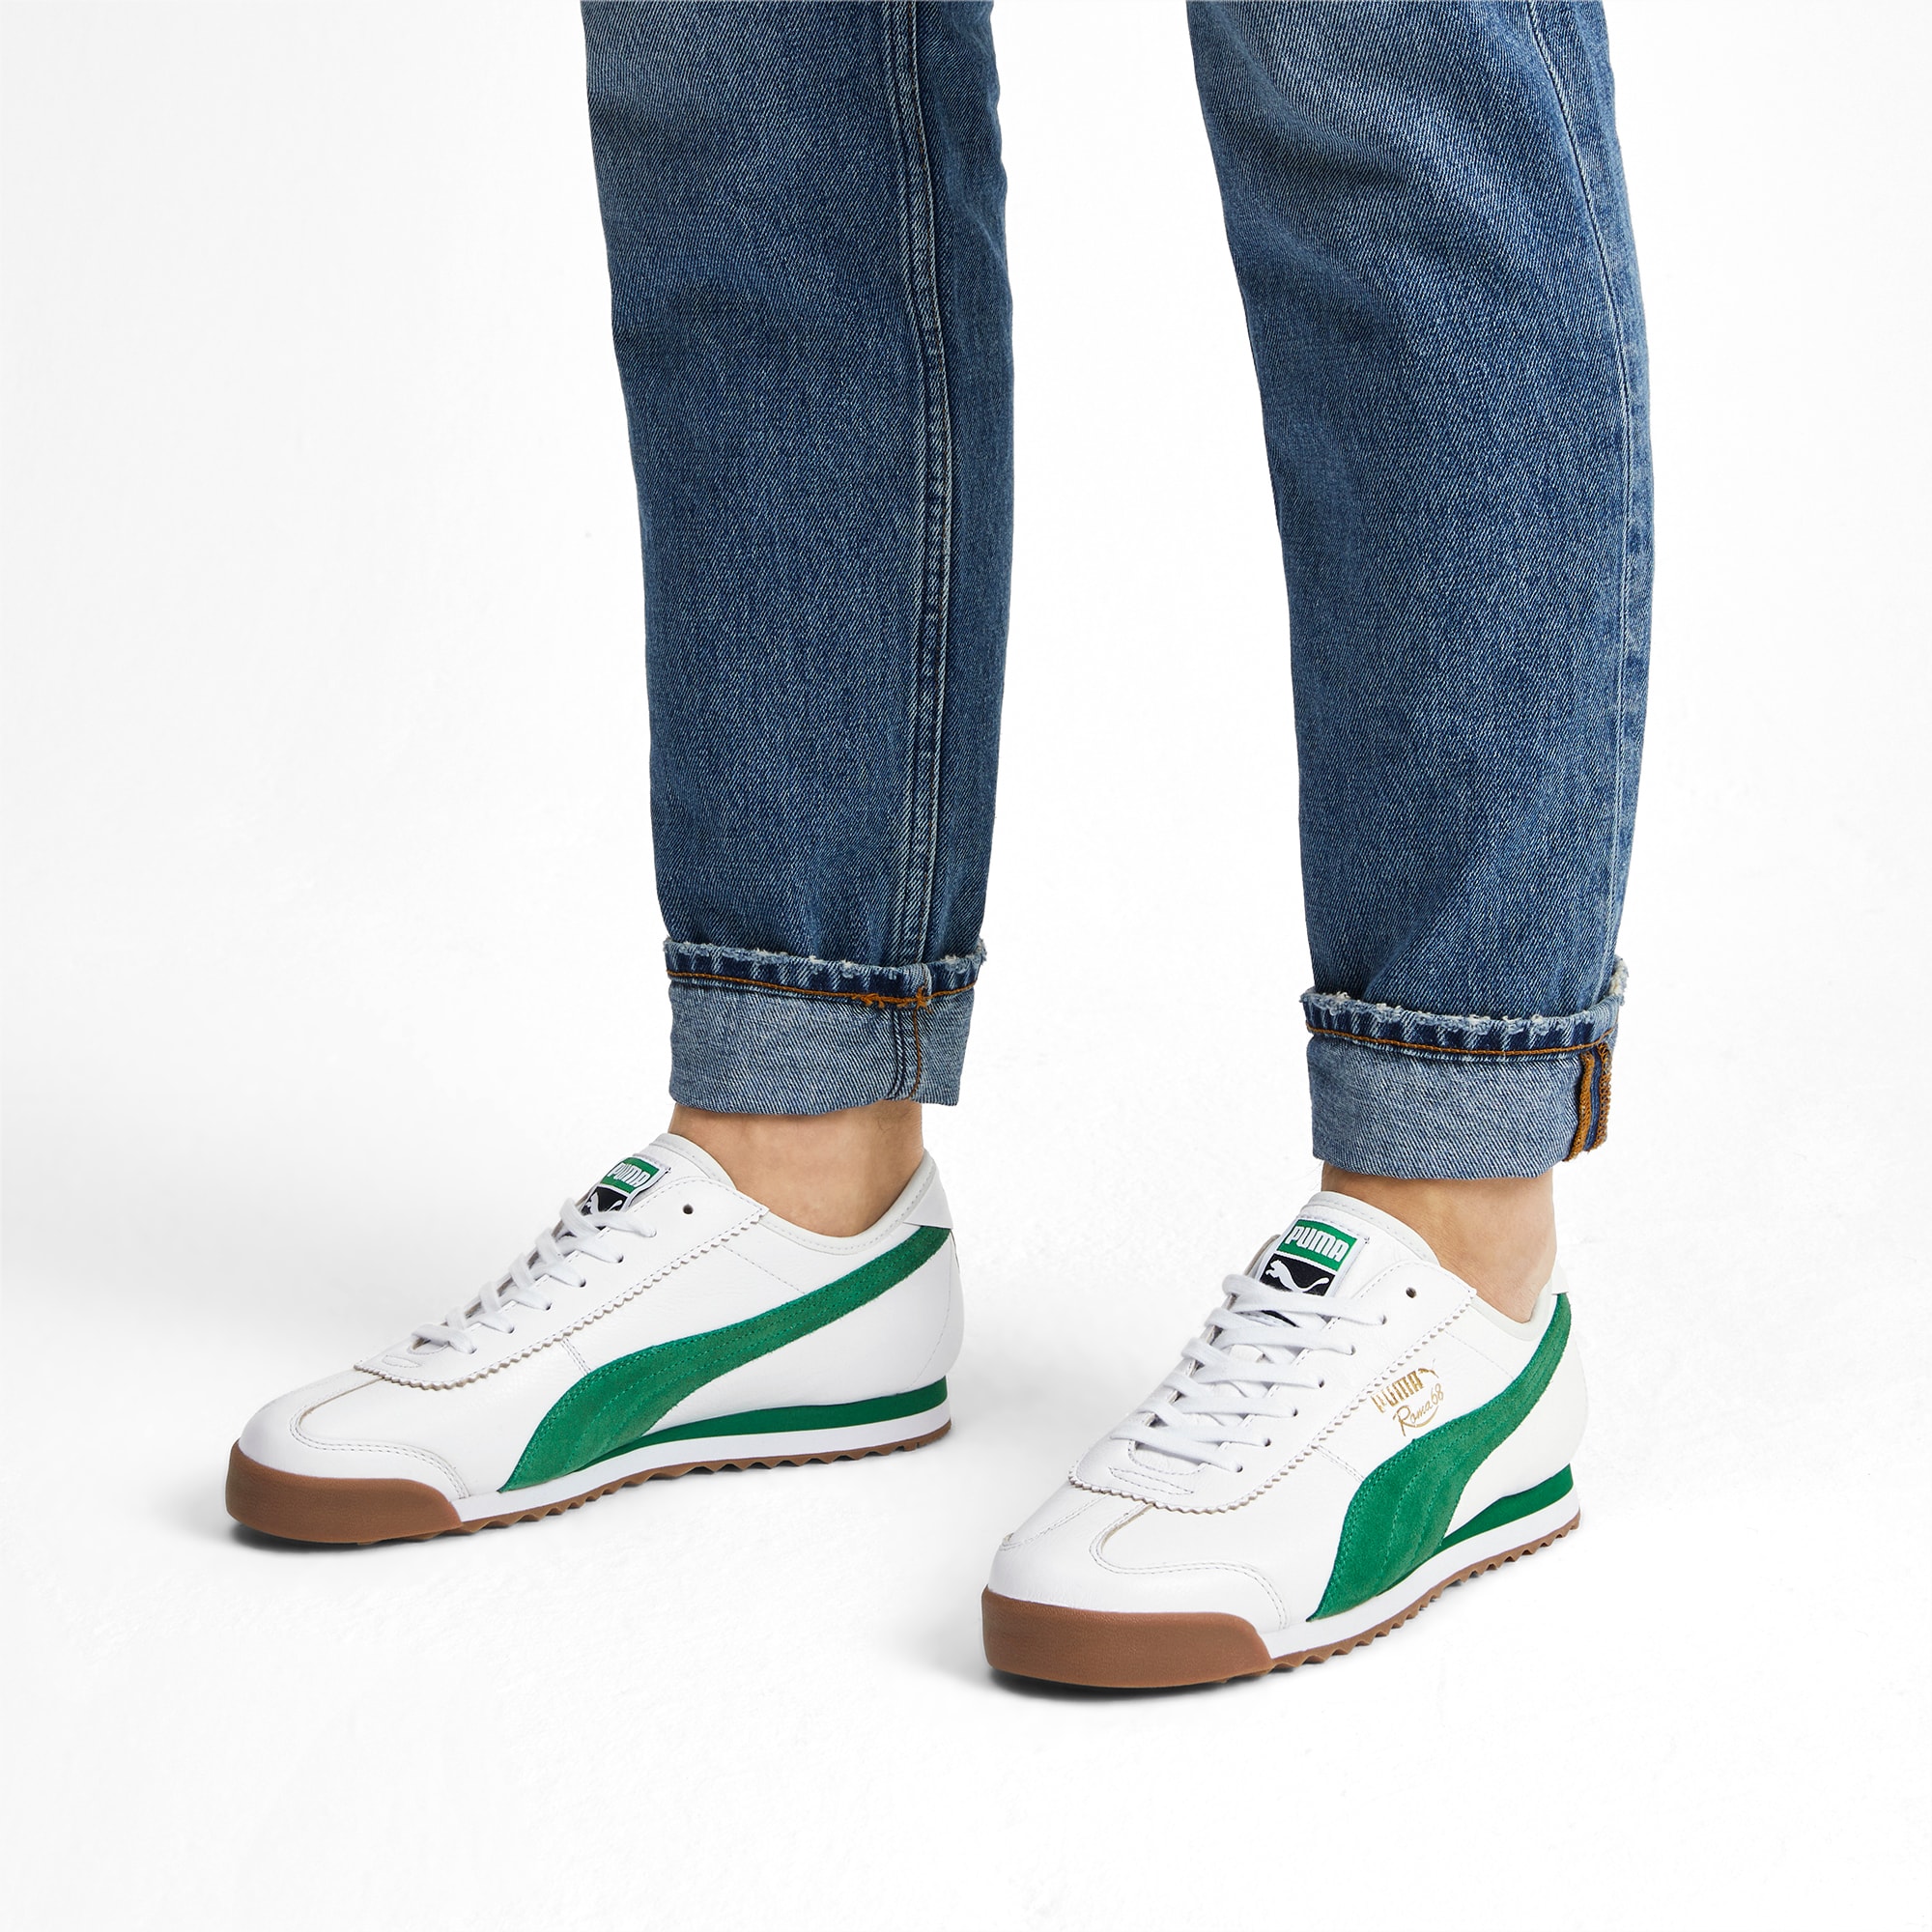 Roma '68 OG Shoes | Puma White-Amazon Green | PUMA Low | PUMA